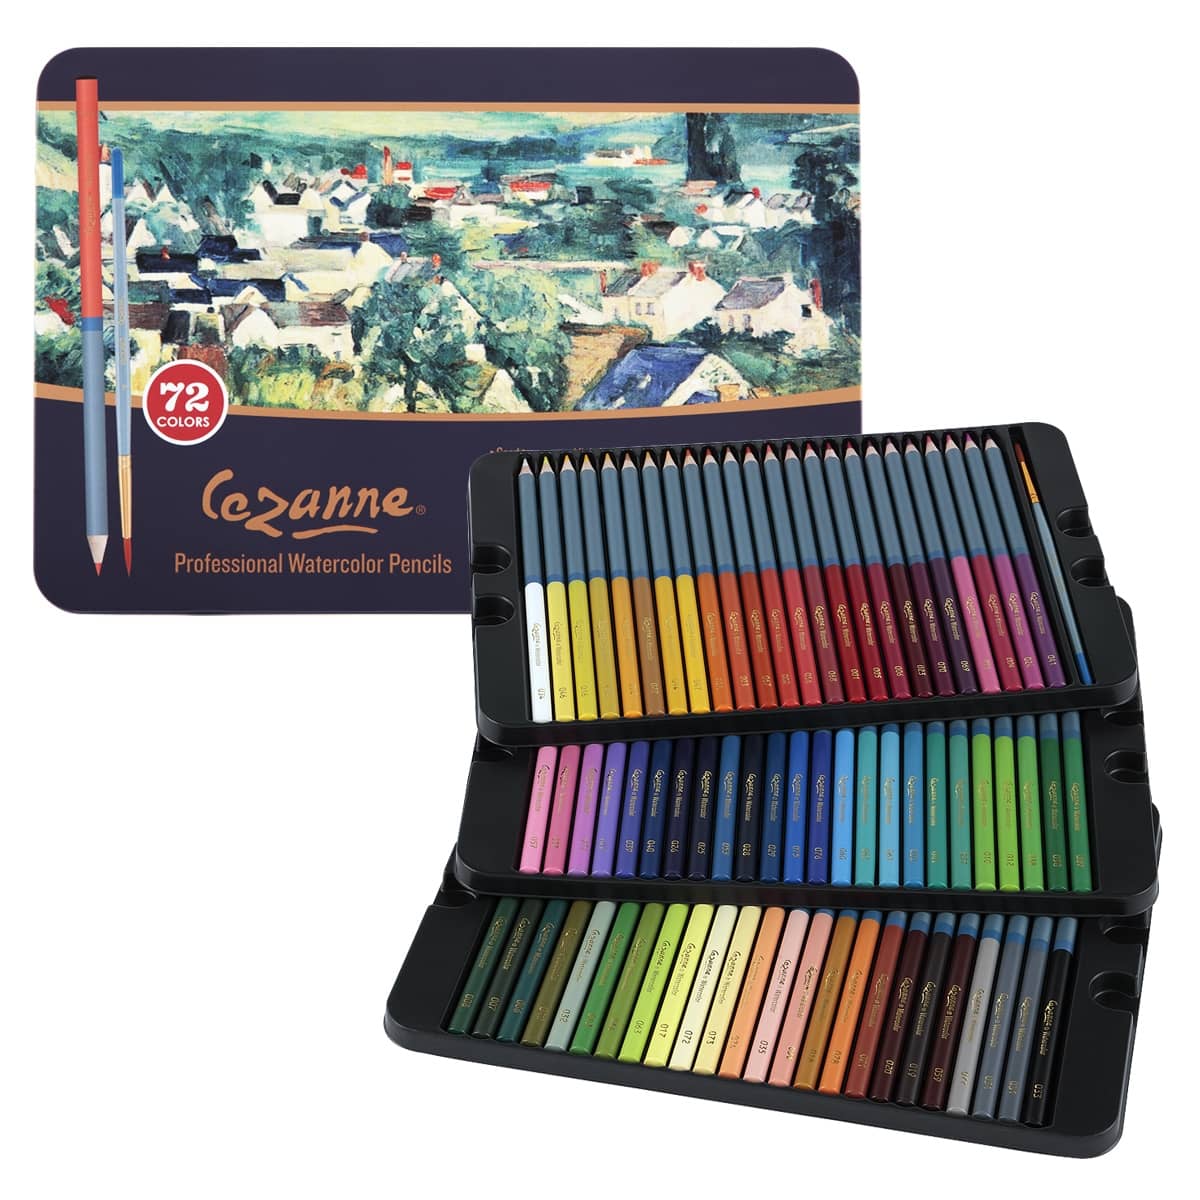  Cezanne Premium Watercolor Pencil Sets